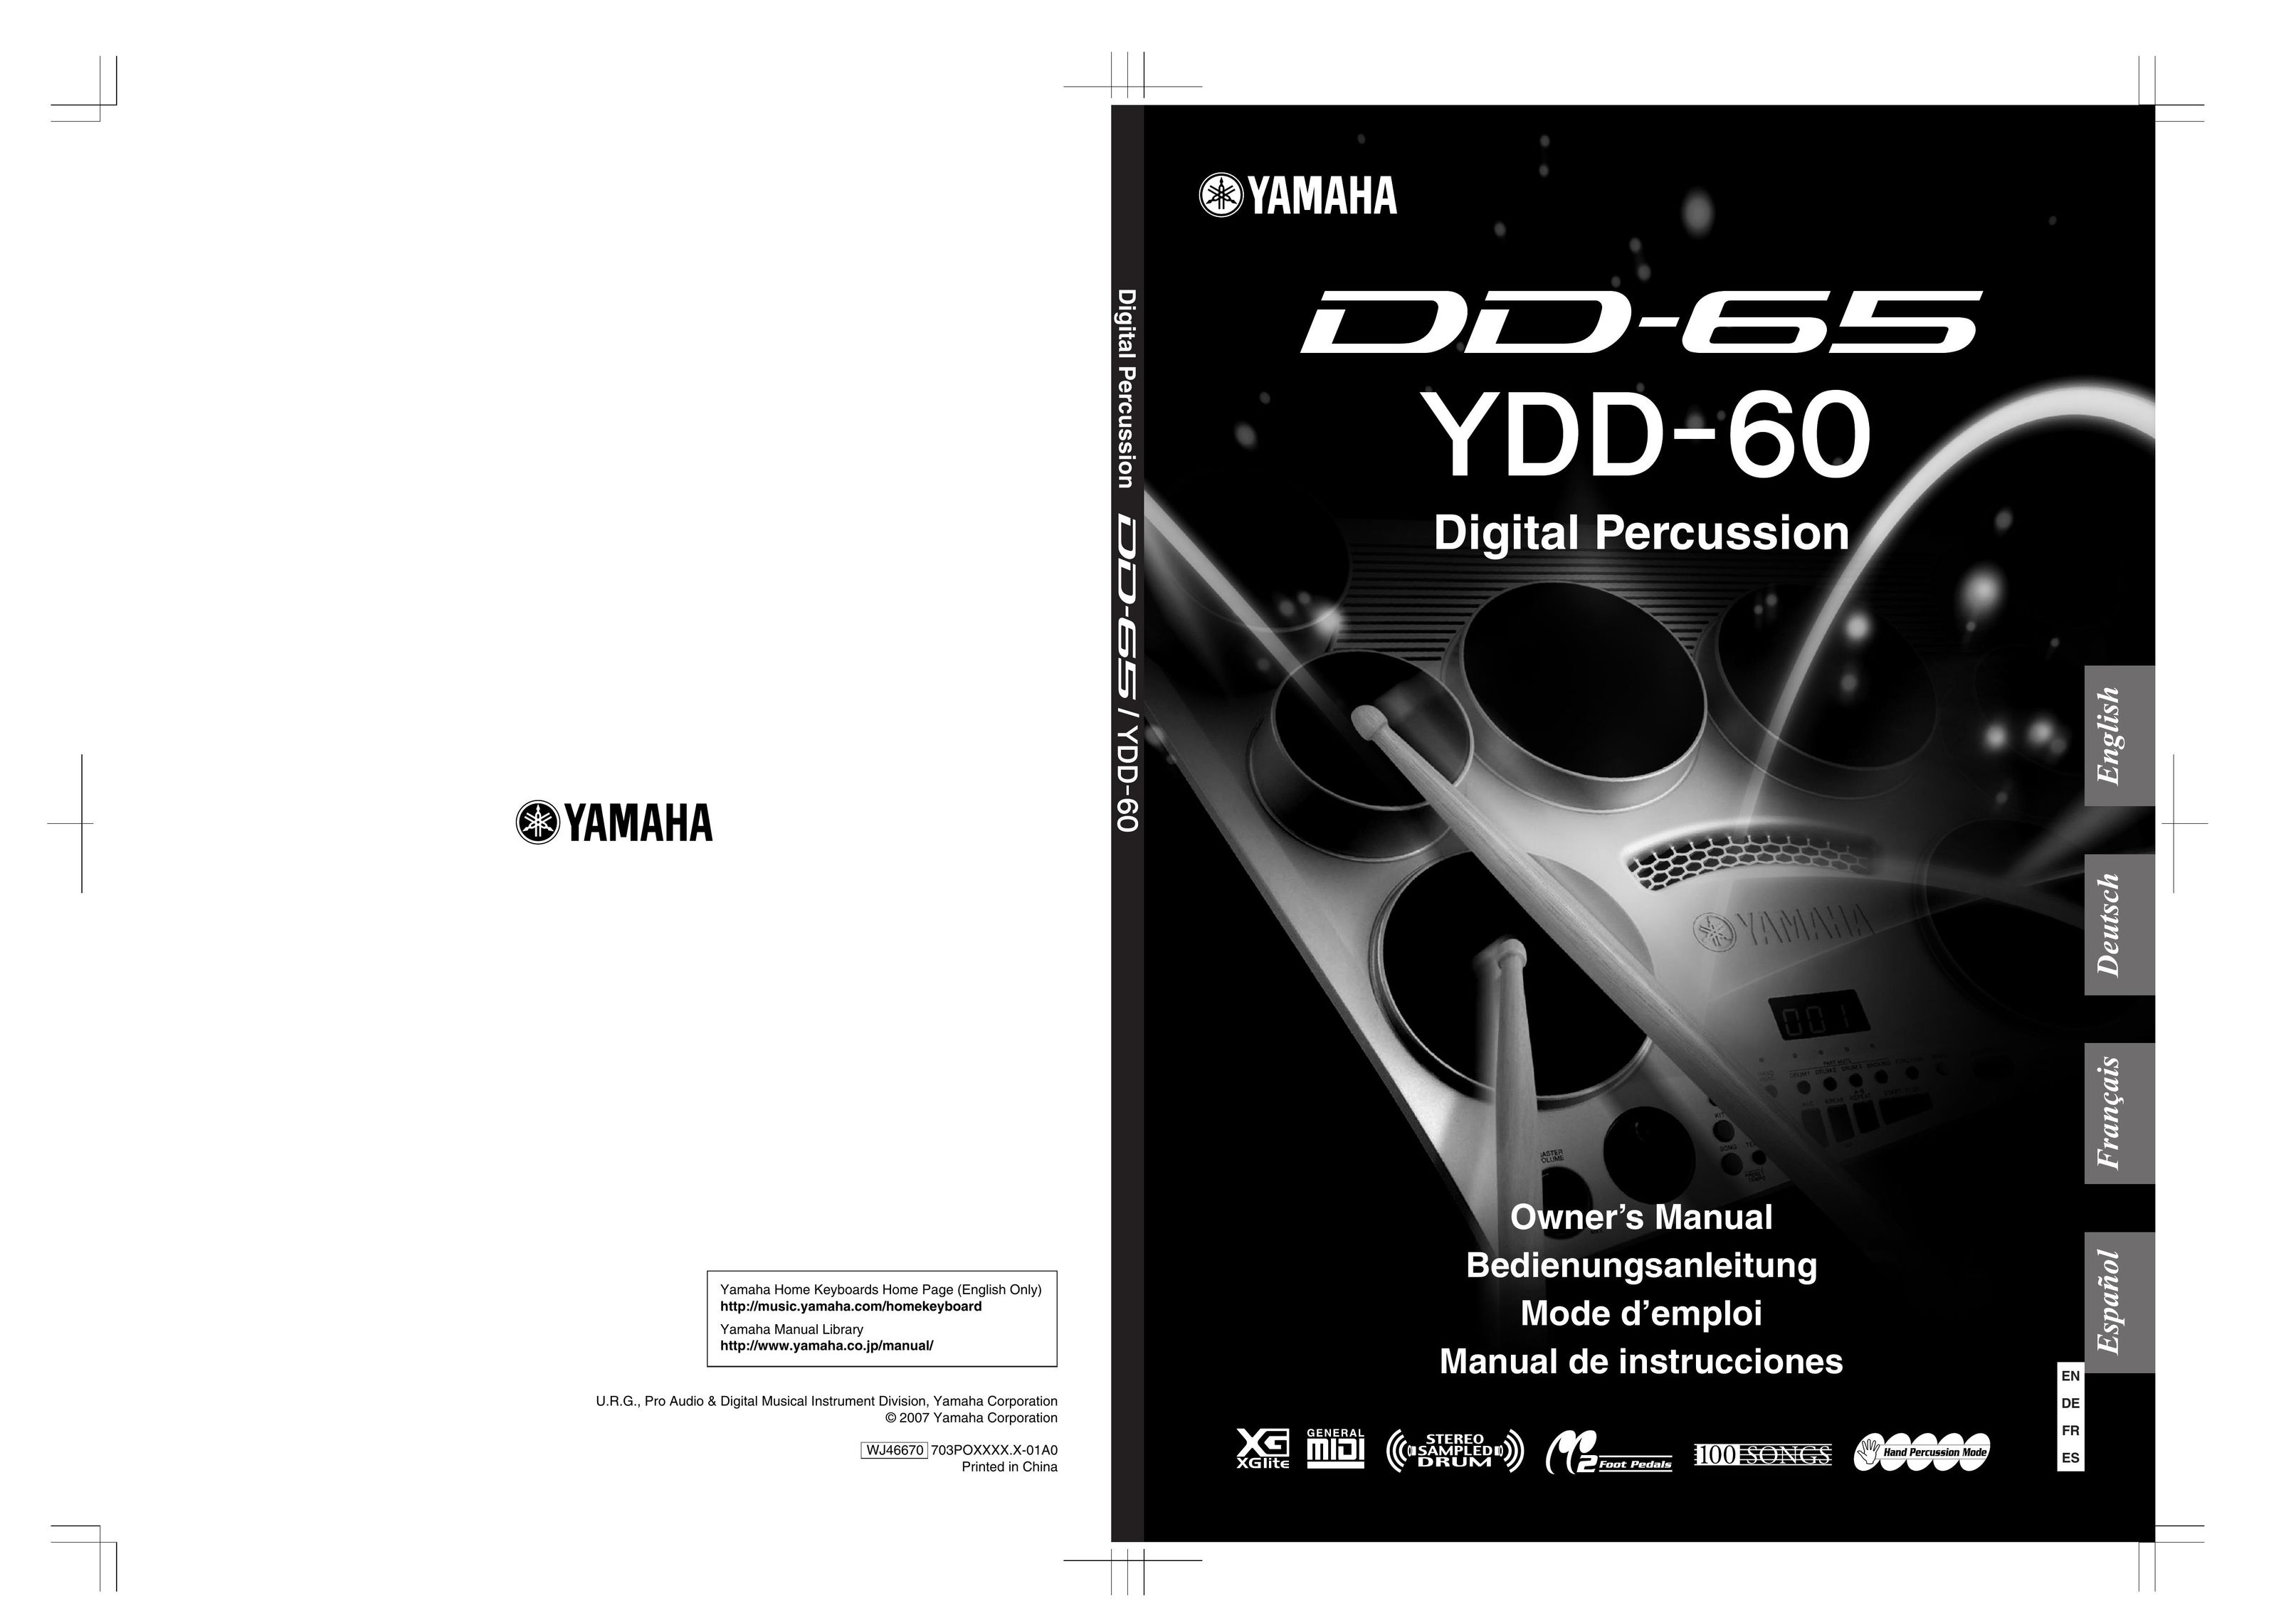 Yamaha DD-65 Car Stereo System User Manual